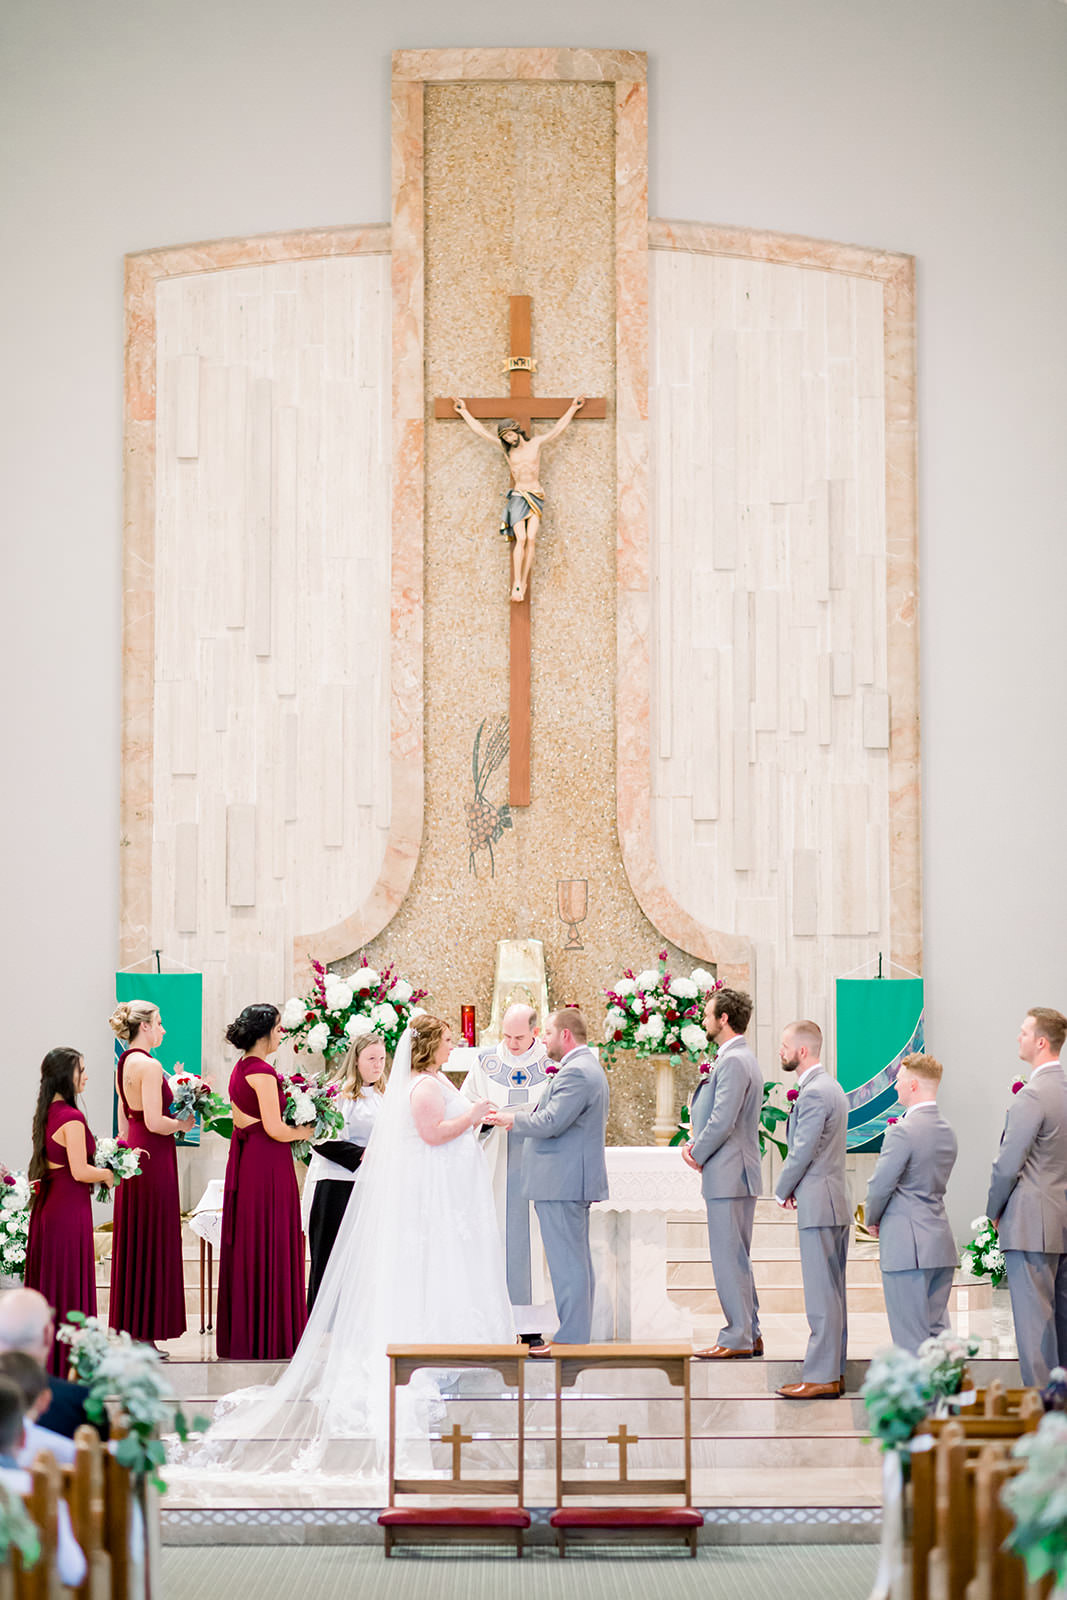 Bride and Groom Exchanging Wedding Vows During Catholic Wedding Ceremony | Tampa Bay Wedding Photographer Shauna and Jordon Photography | St. Pete Wedding Venue St. John Vianney Catholic Church